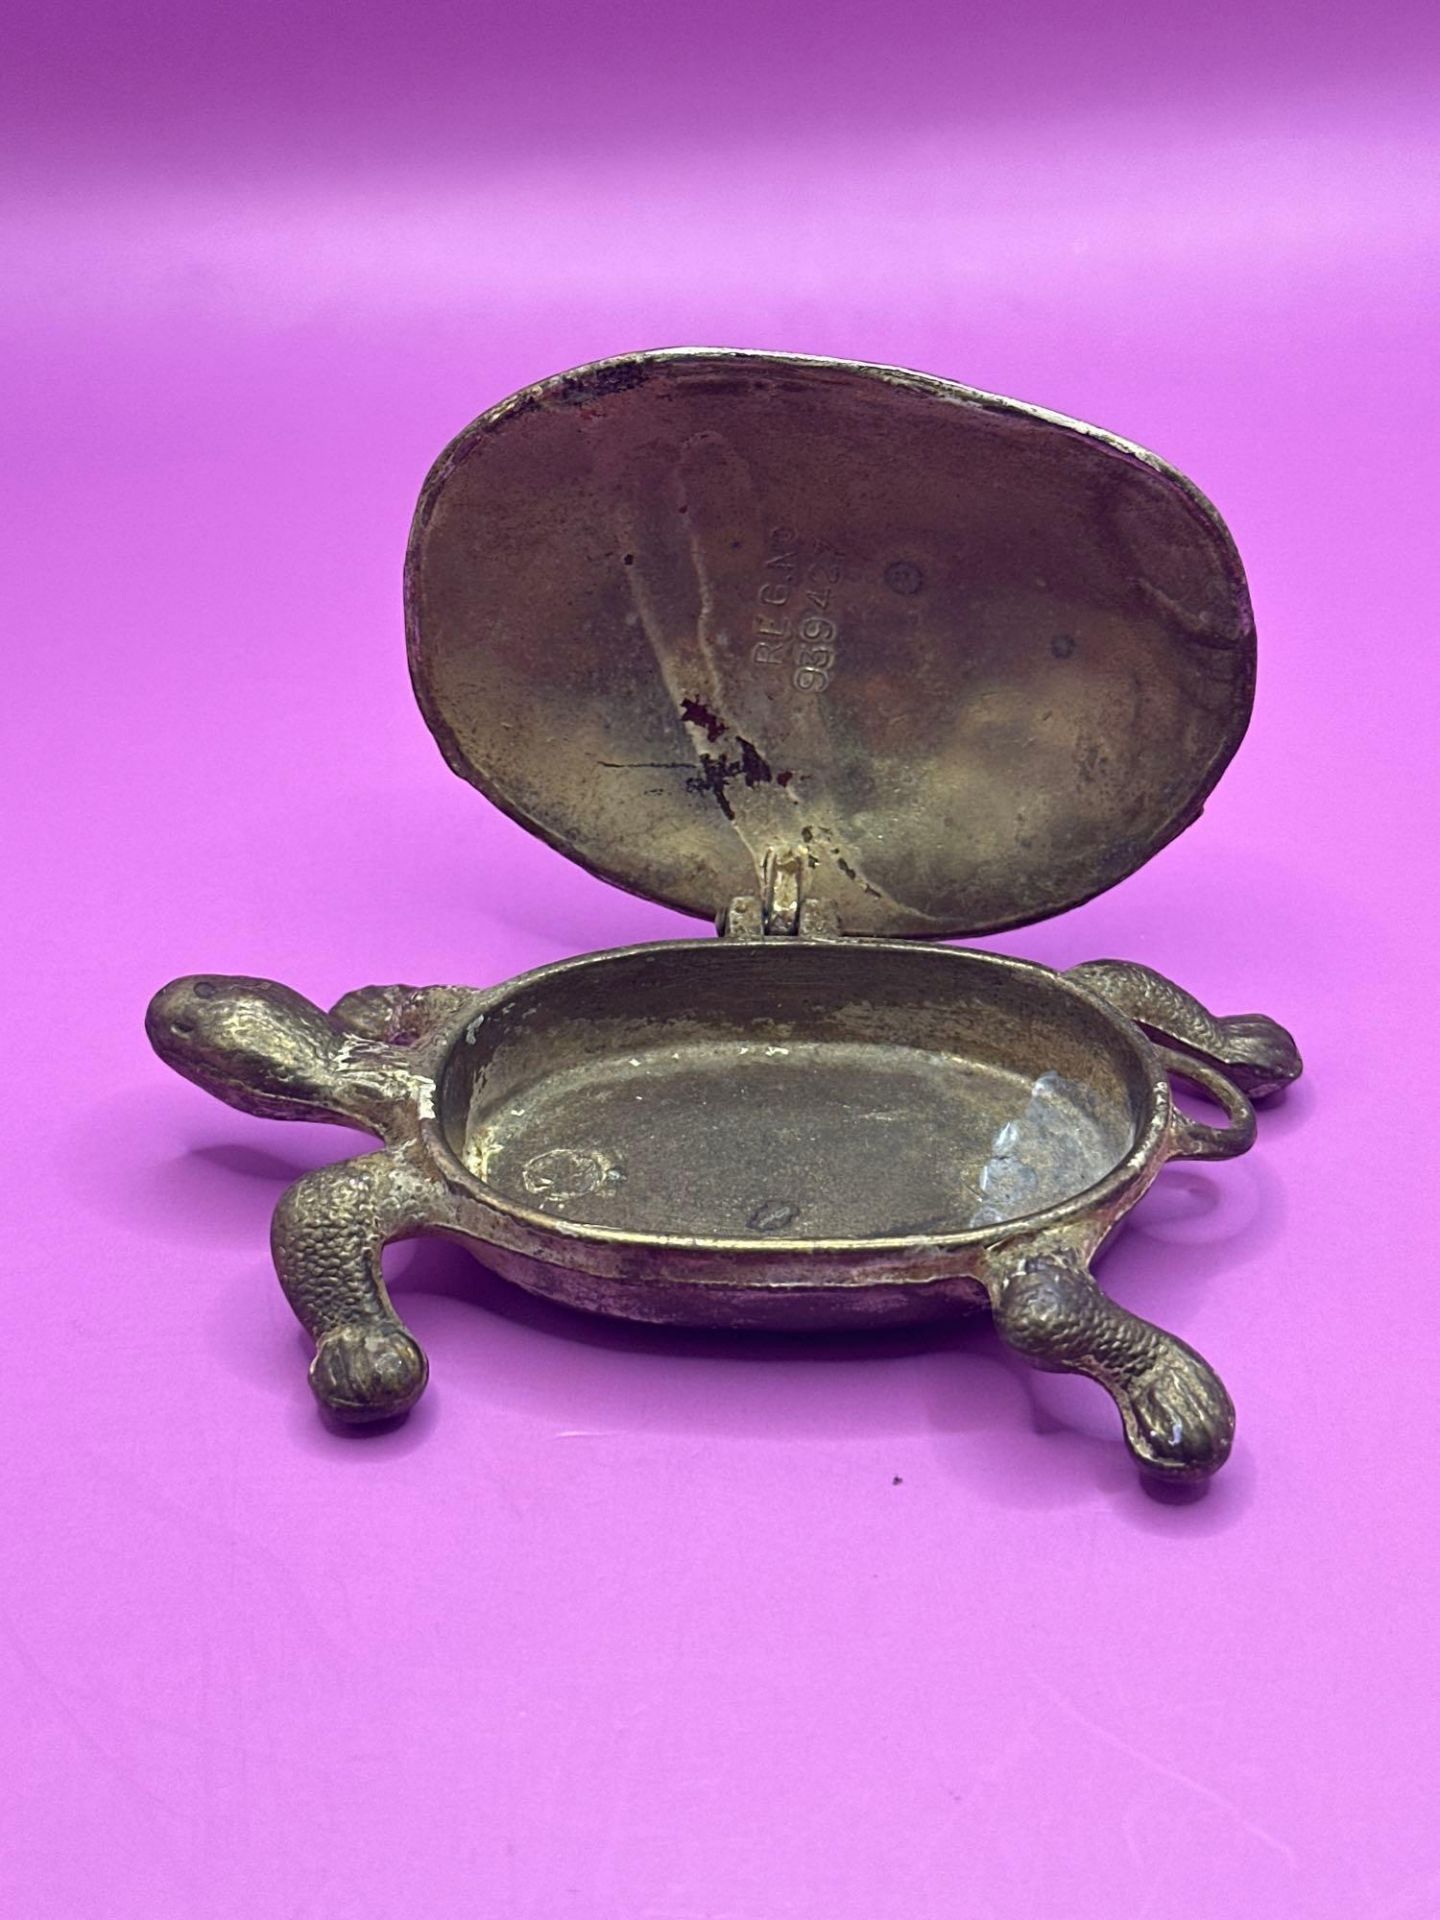 Antique Brass Hinged Turtle/Tortoise Pin Box, Pill Box, Trinket Box, Reg No 939427. 11cm - Image 5 of 5